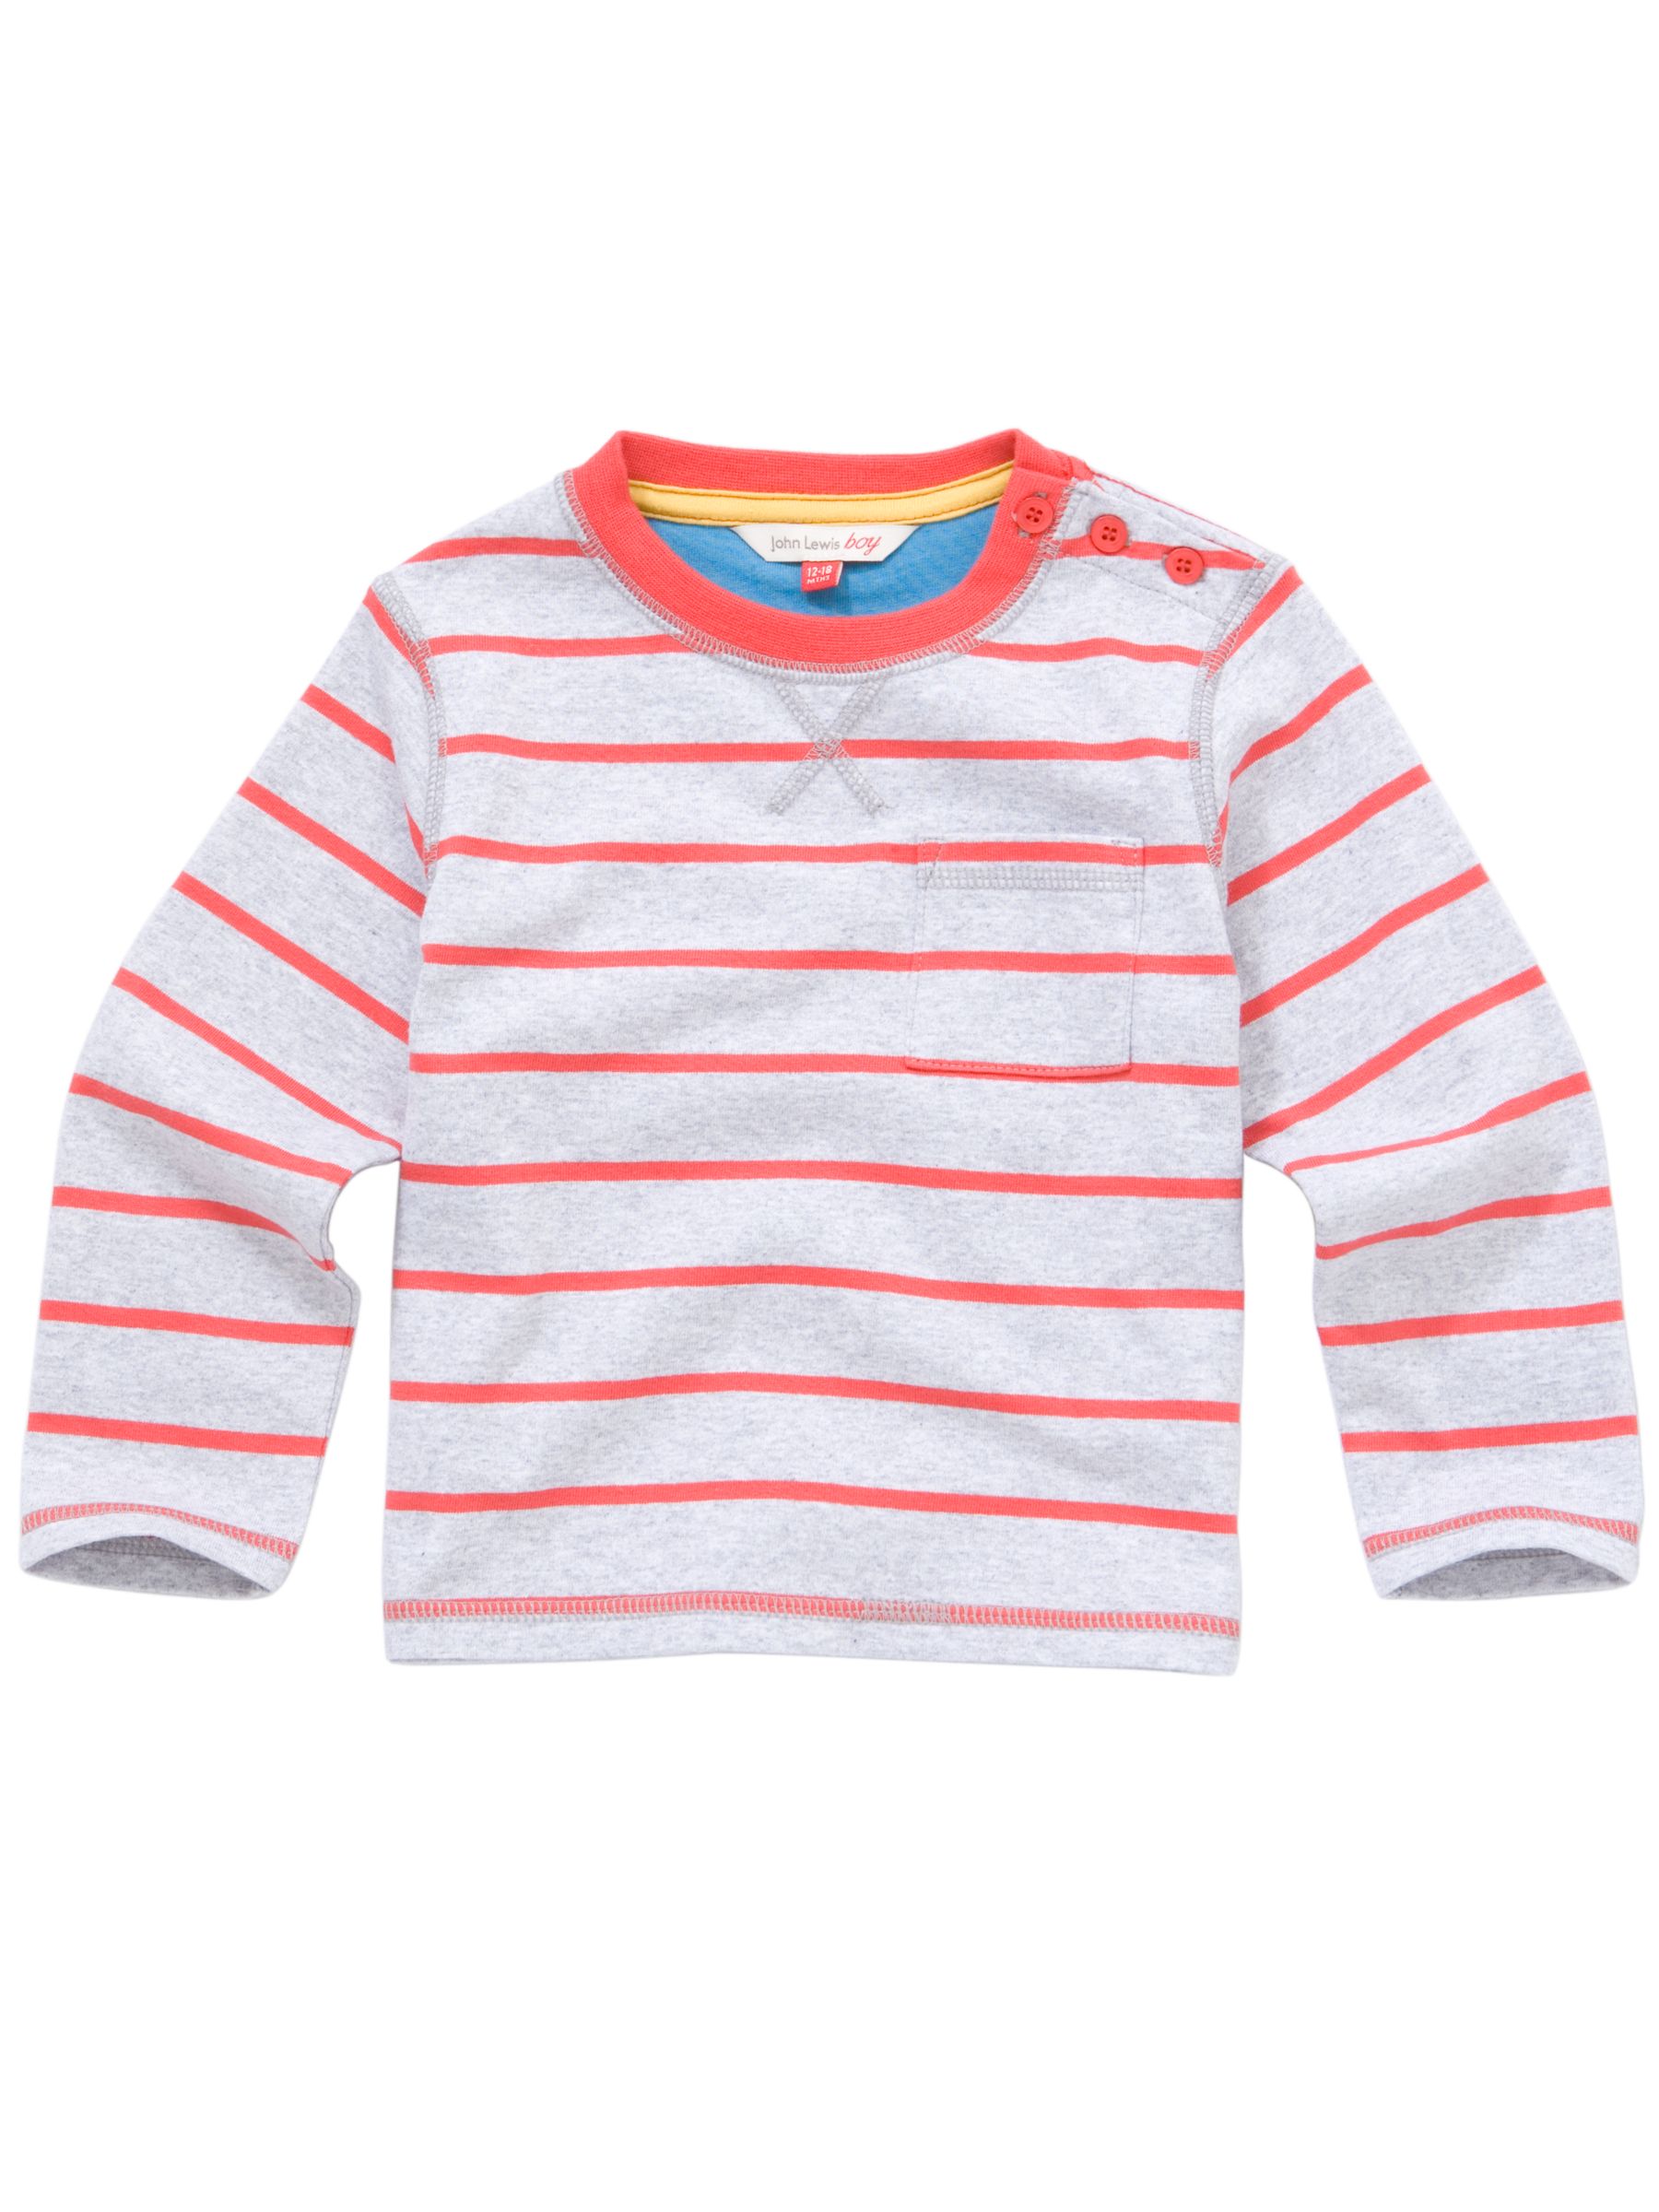 Stripe Print T-Shirt, Red/grey